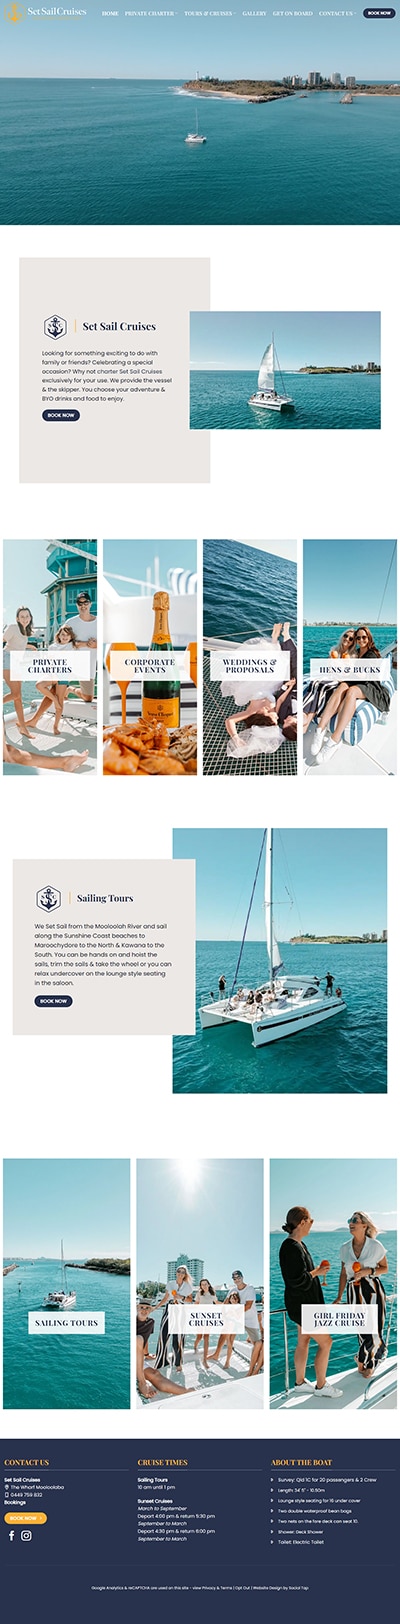 Our Work Hospitality Tourism Website Design Set Sail Cruises